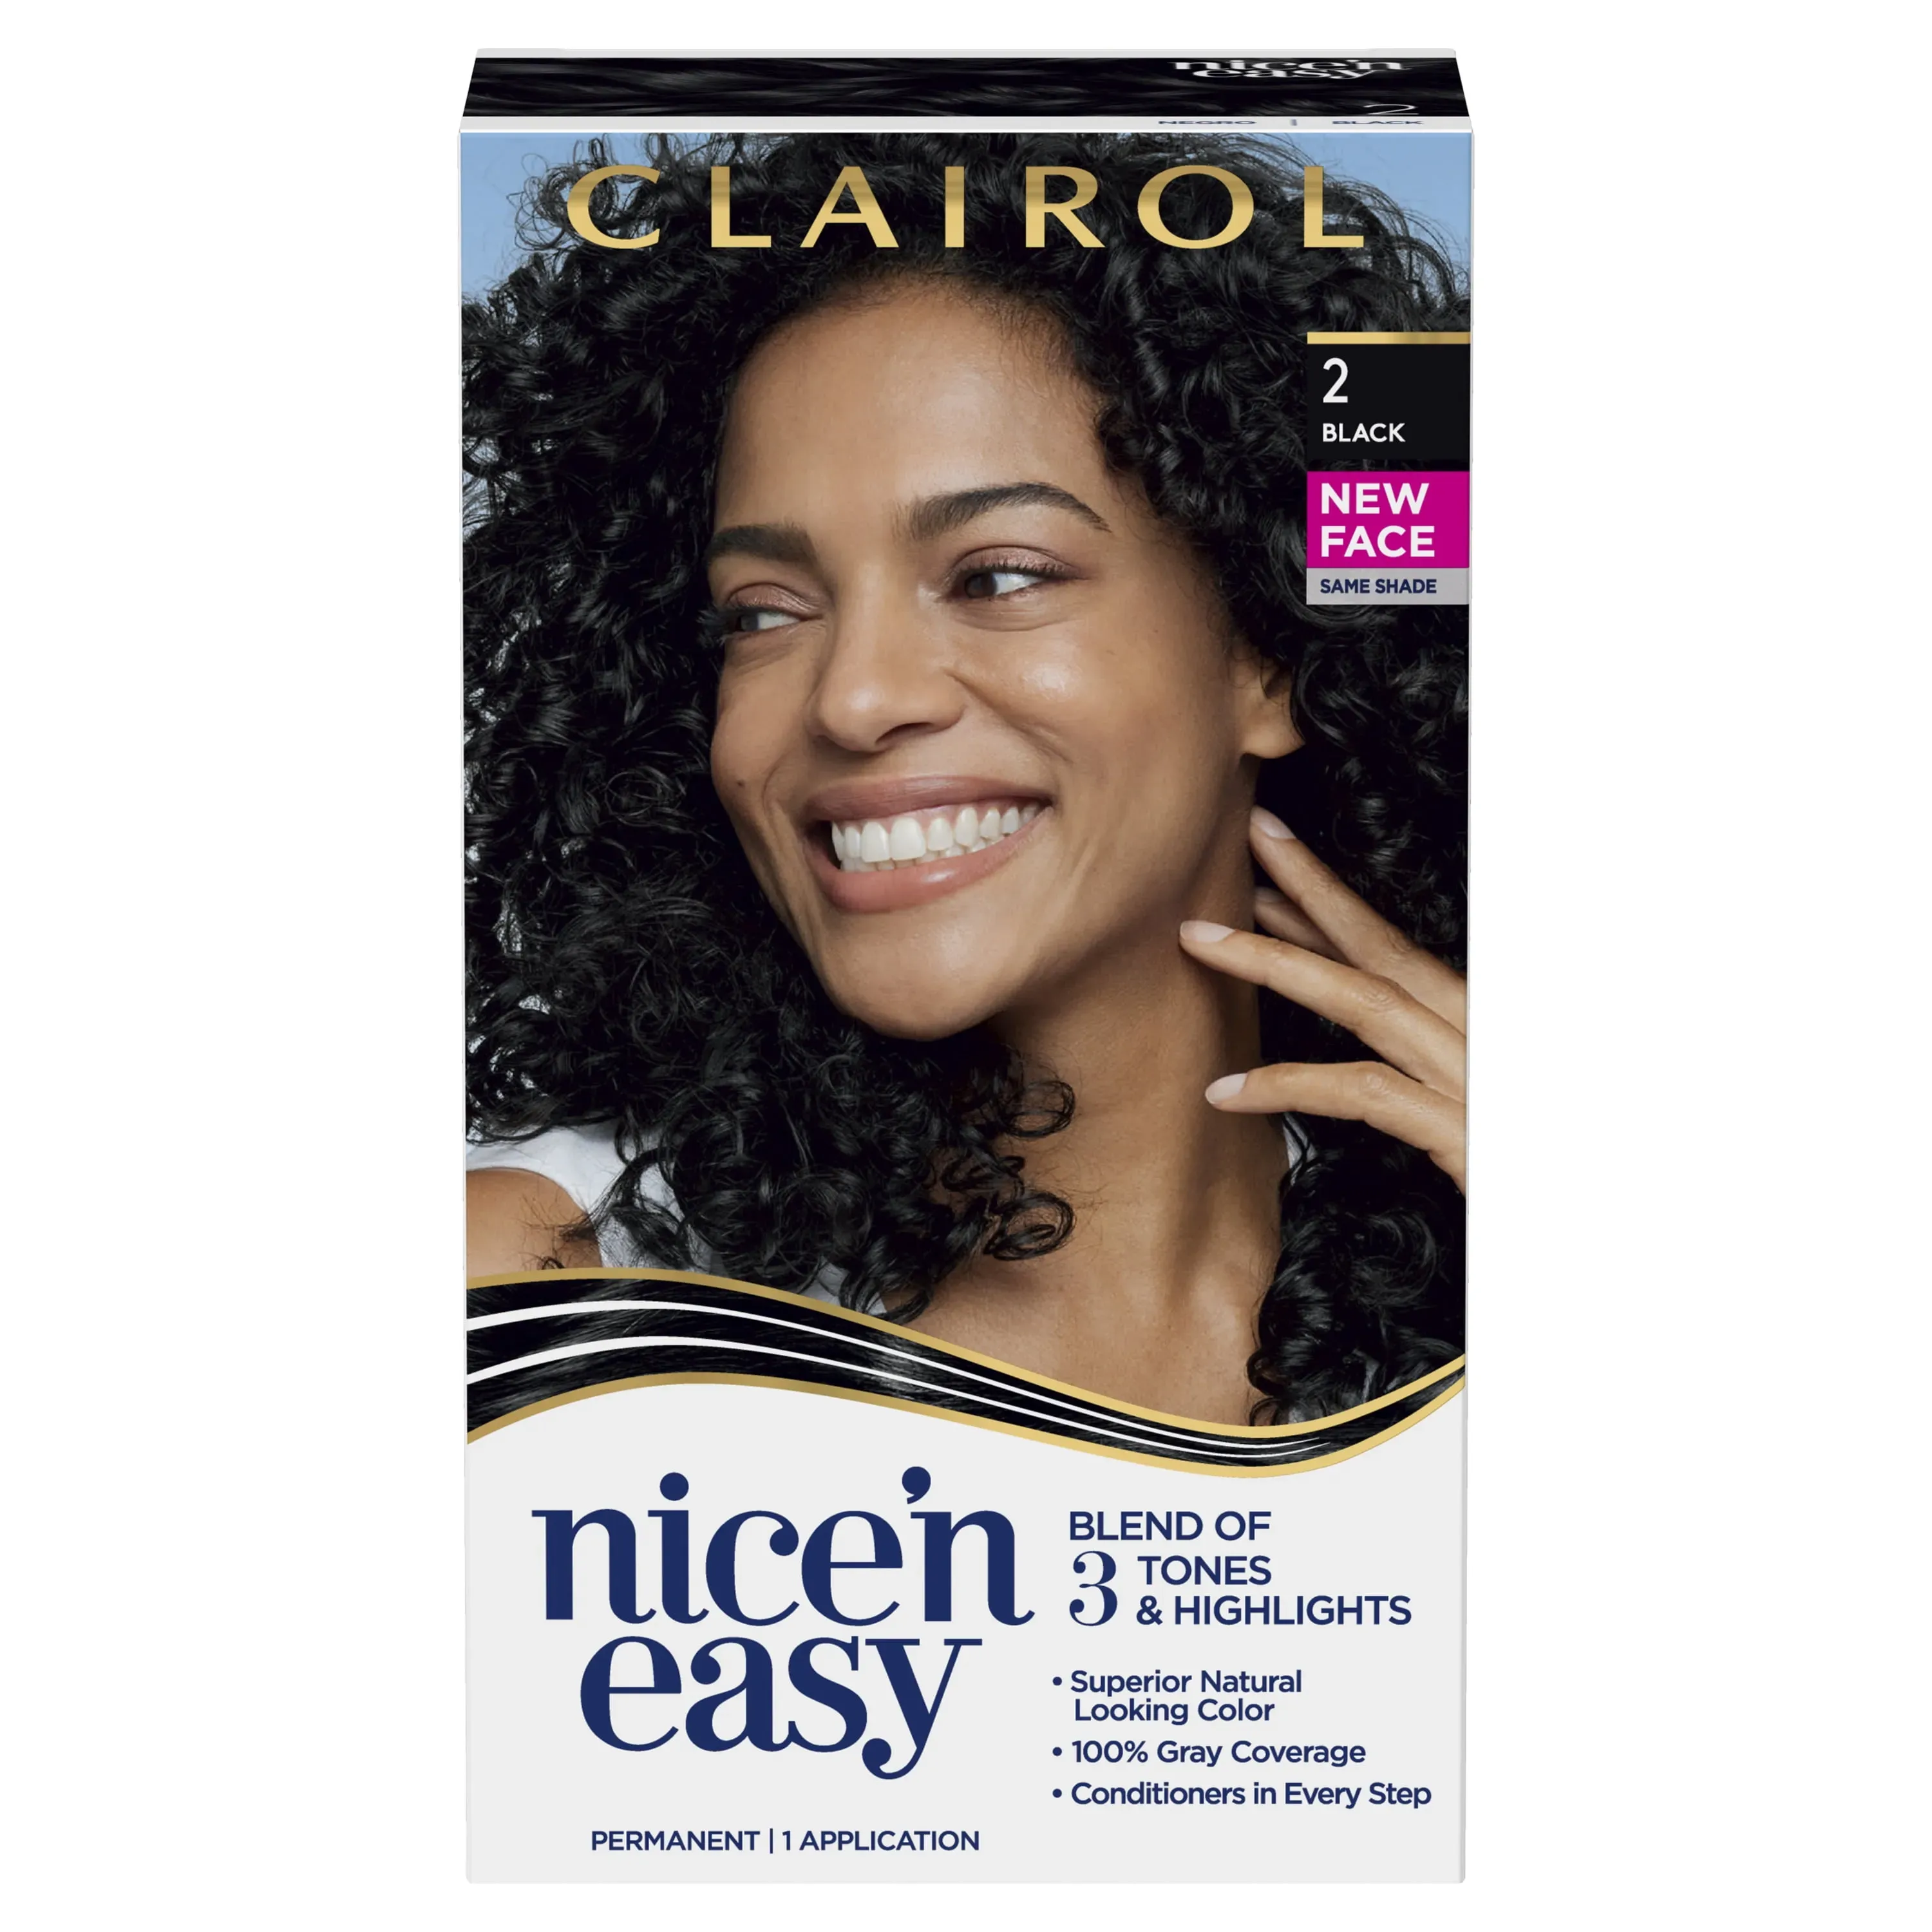 Clairol Nice'n Easy Permanent Hair Color Dye Creme, 2 Black, 1 Application